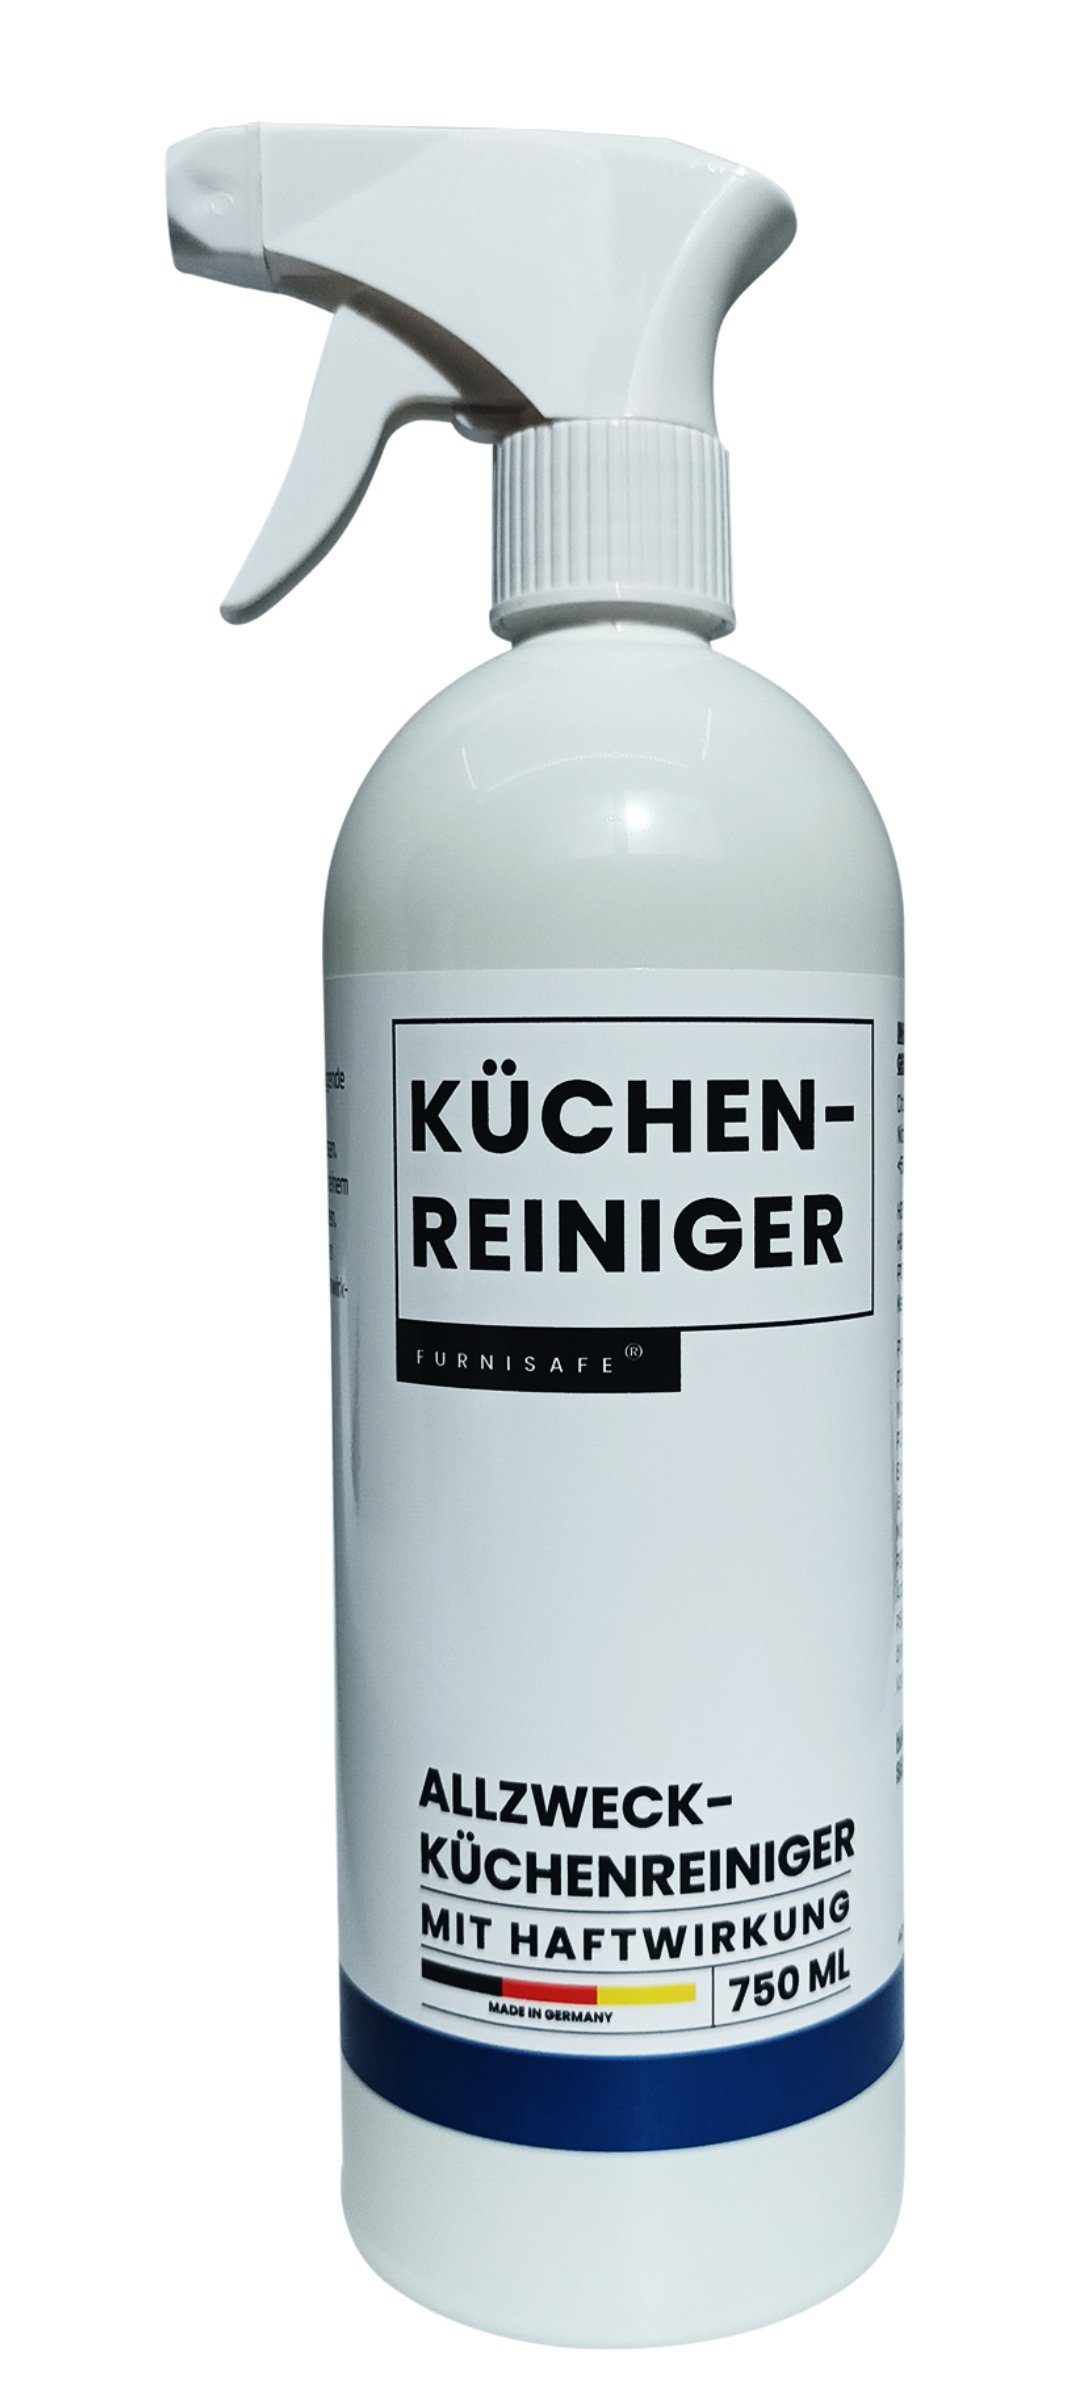 Küchenreiniger Made Germany FurniSafe in - 750ml FurniSafe Küchenreiniger - Allzweckreinger